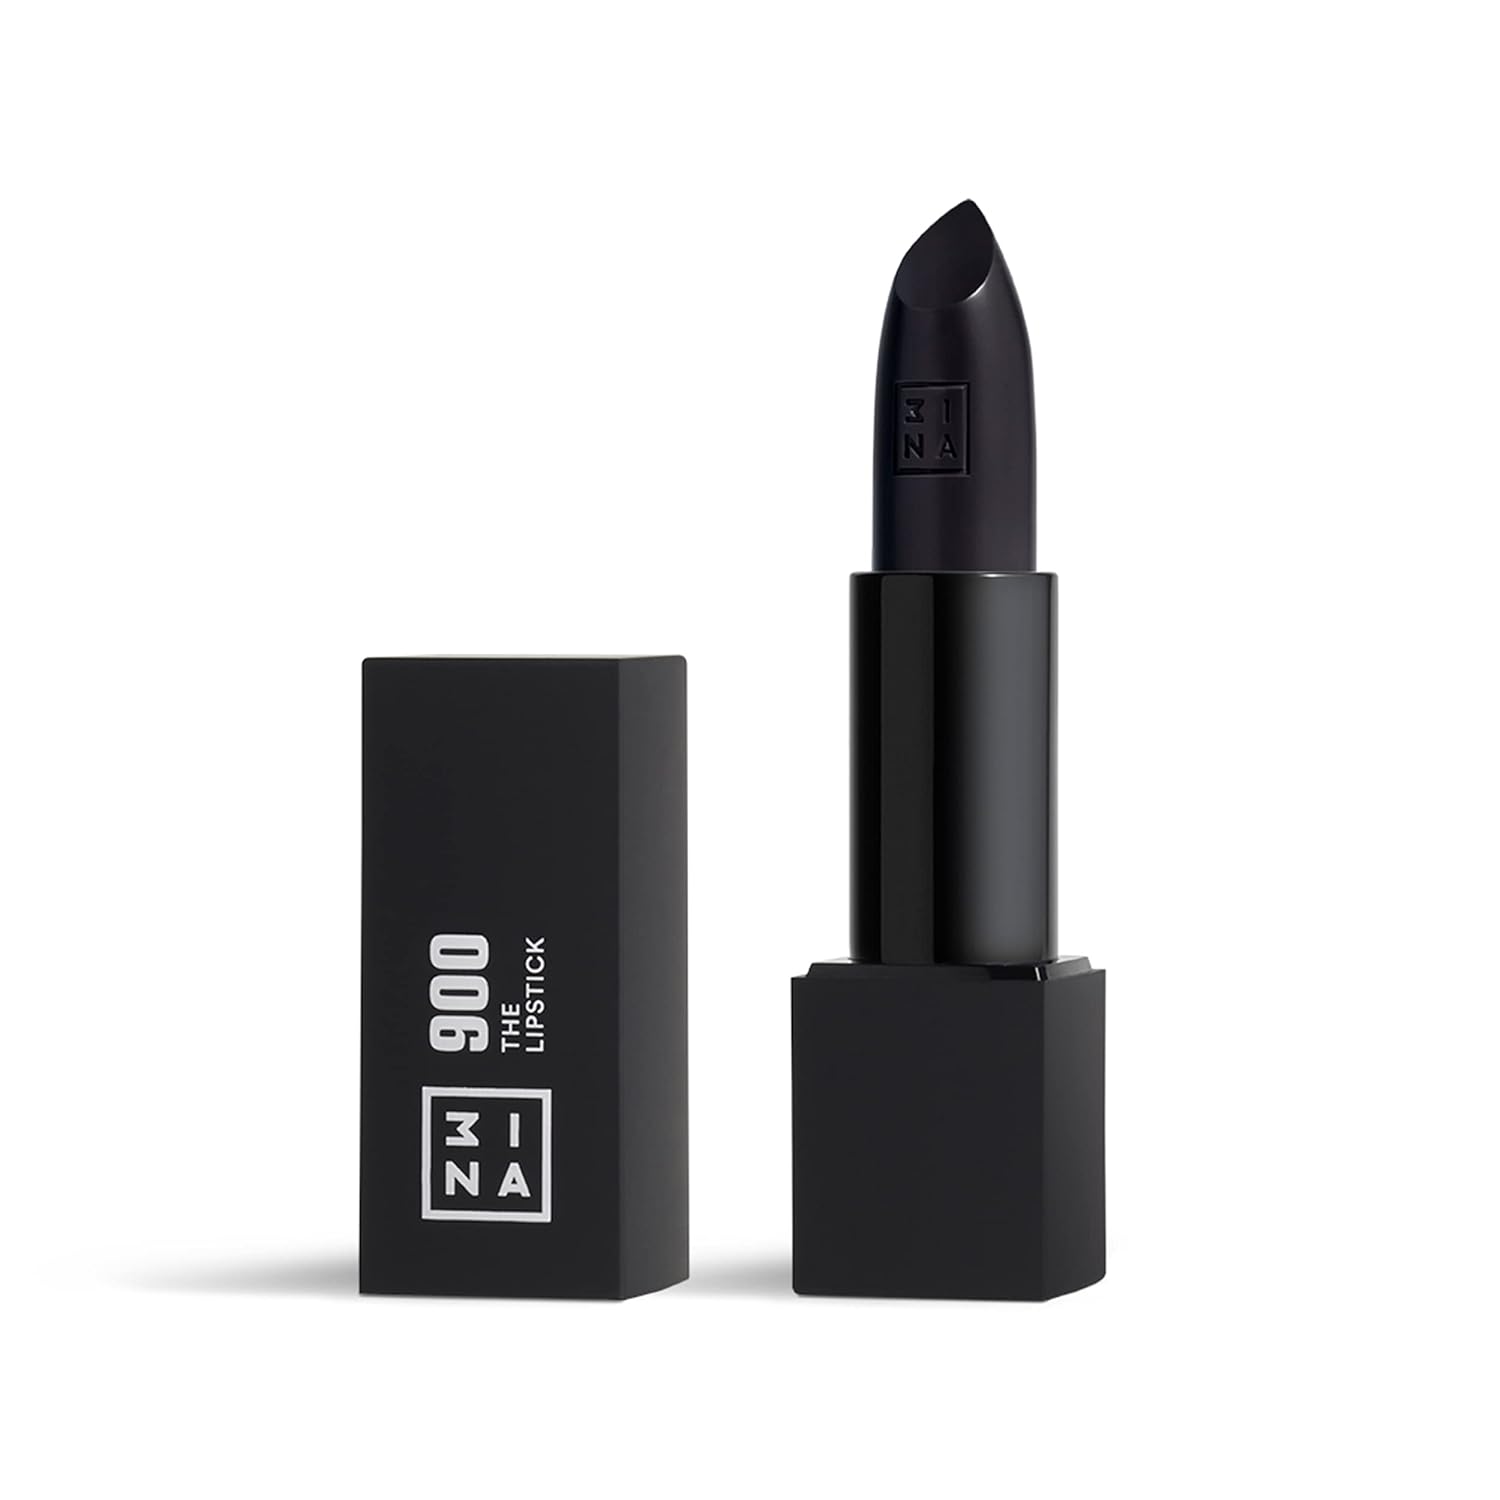 3ina make -up - The Lipstick 900 - Black Matte Lipstick - Matte Lip Pen With Vitamin E And Shea Butter - Long -Lasting Highly Pigmented Cream - Vanilla Fragrance - Vegan - Cruethy Free